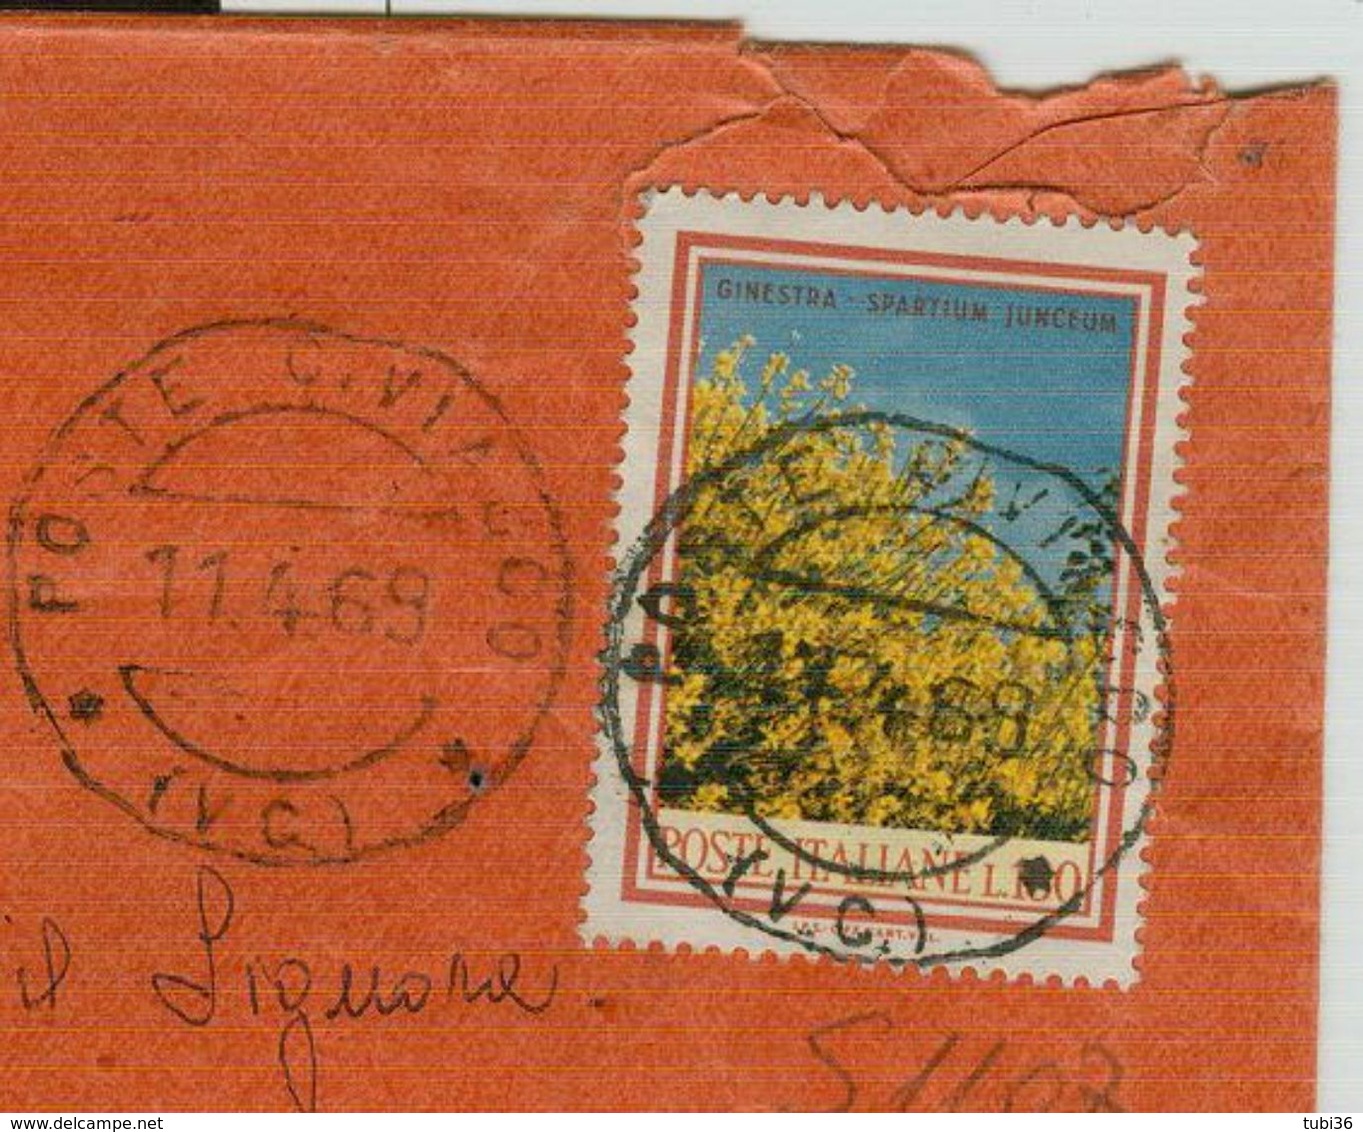 FLORA £.170 (S1107),ISOLATO TARIFFA LETTERA RACCOMANDATA,1969,TIMBRO POSTE CIVIASCO (VERCELLI), - 1961-70: Storia Postale